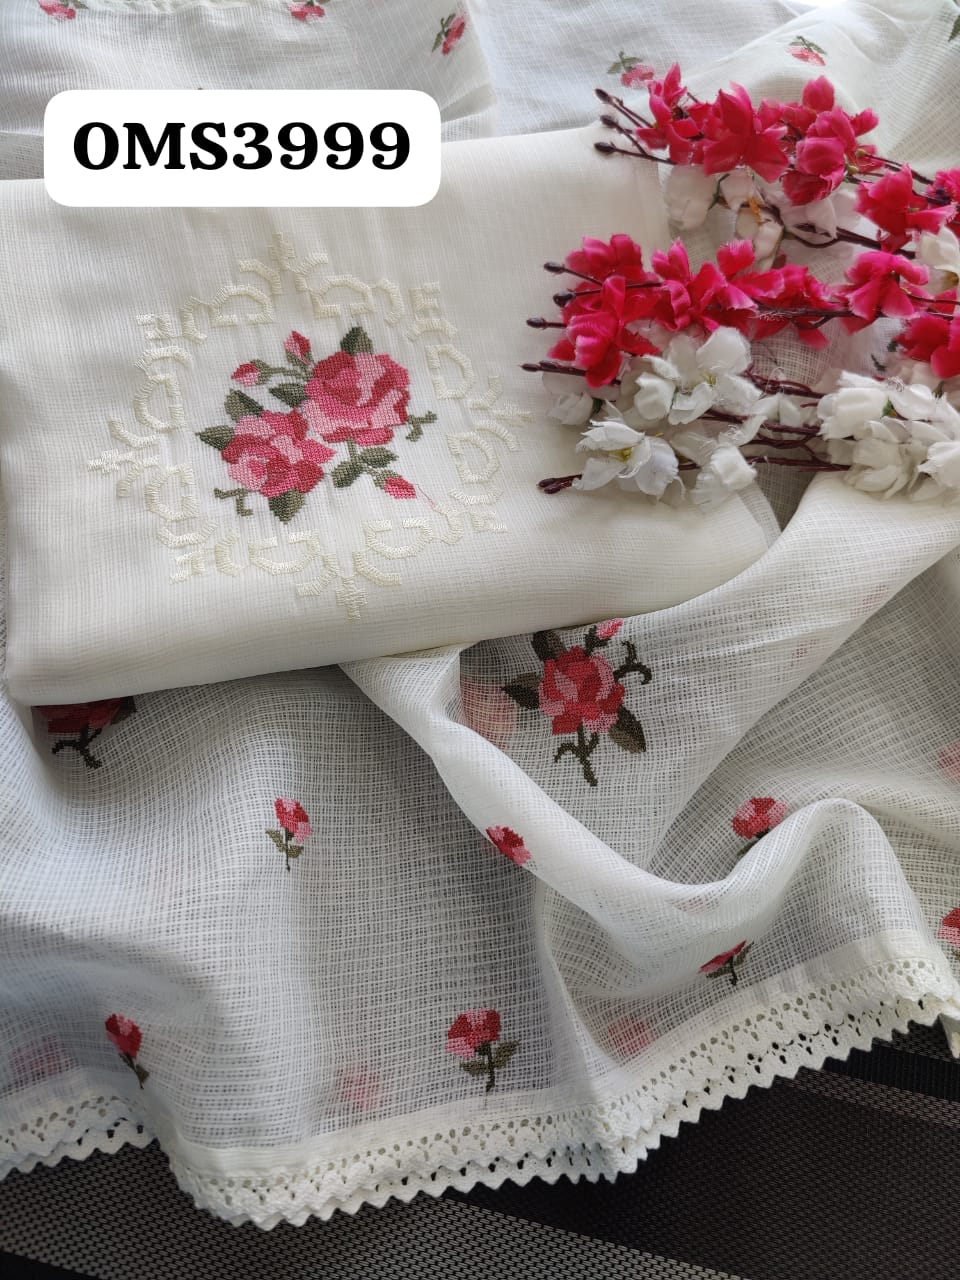 Beautiful Pure Kota Silk Embroidery Suit